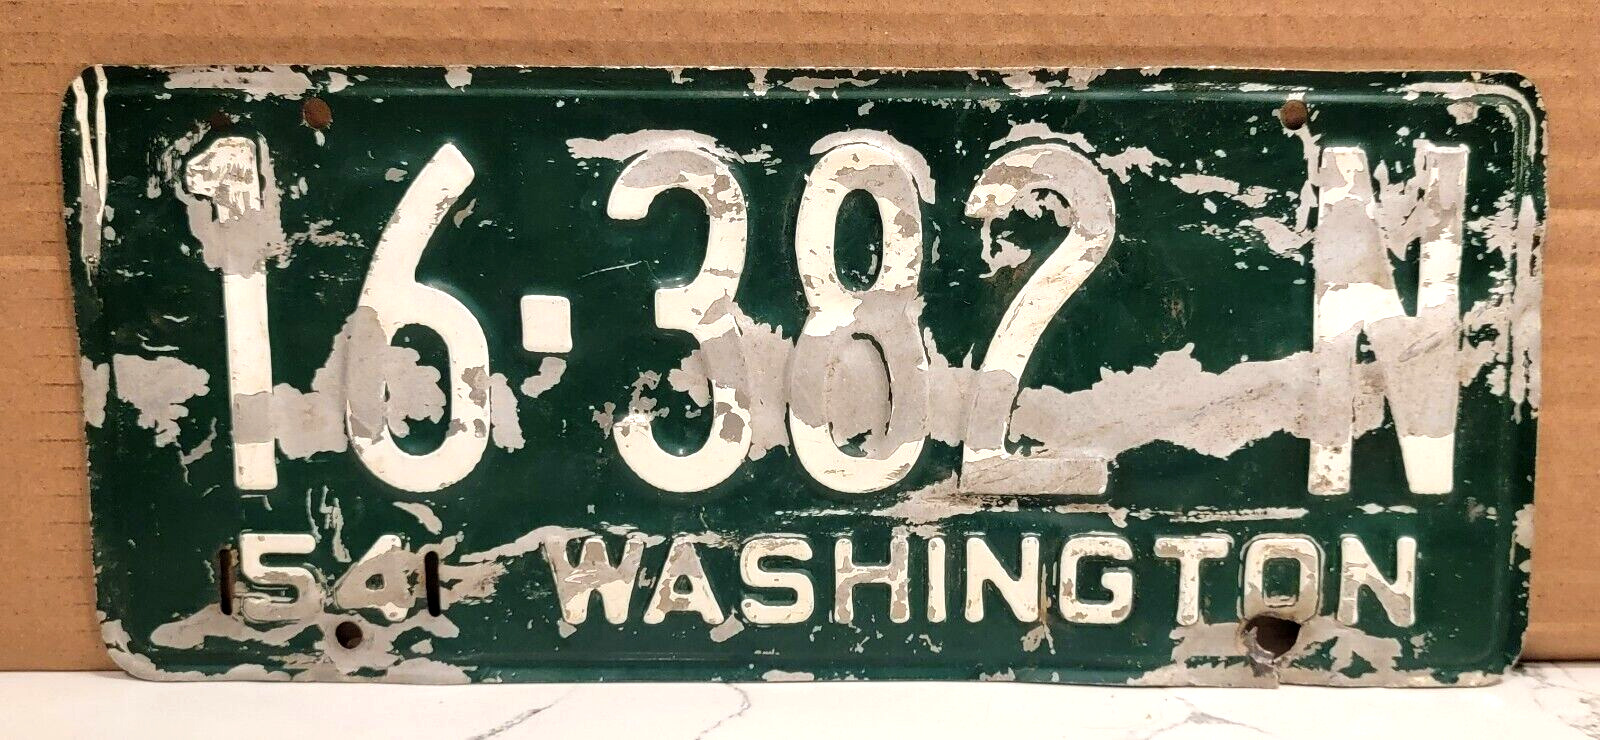 1954 WASHINGTON License Plate -- 16-382 N -- vintage \'54 WA 1950s